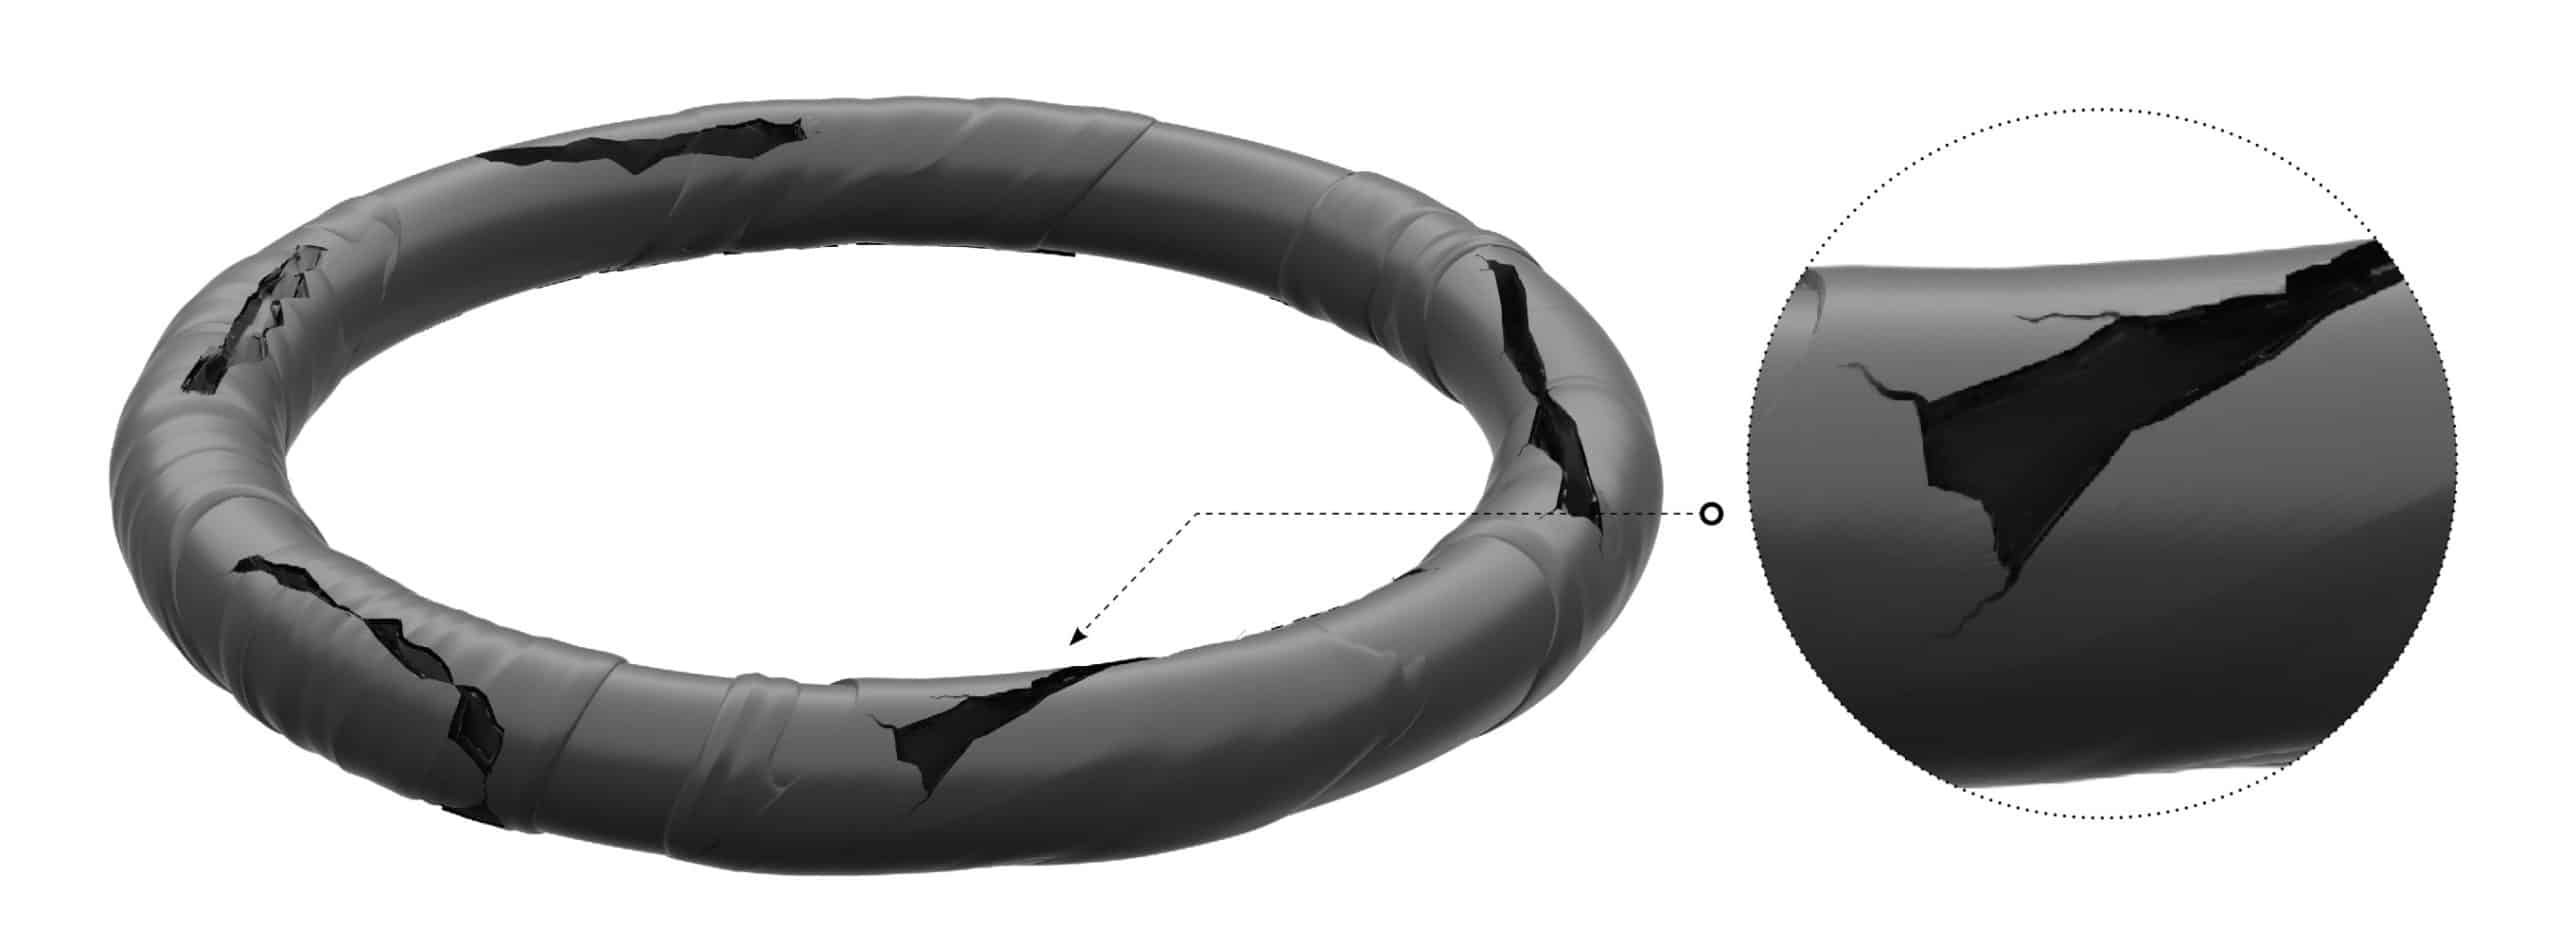 Type of O-rings failure